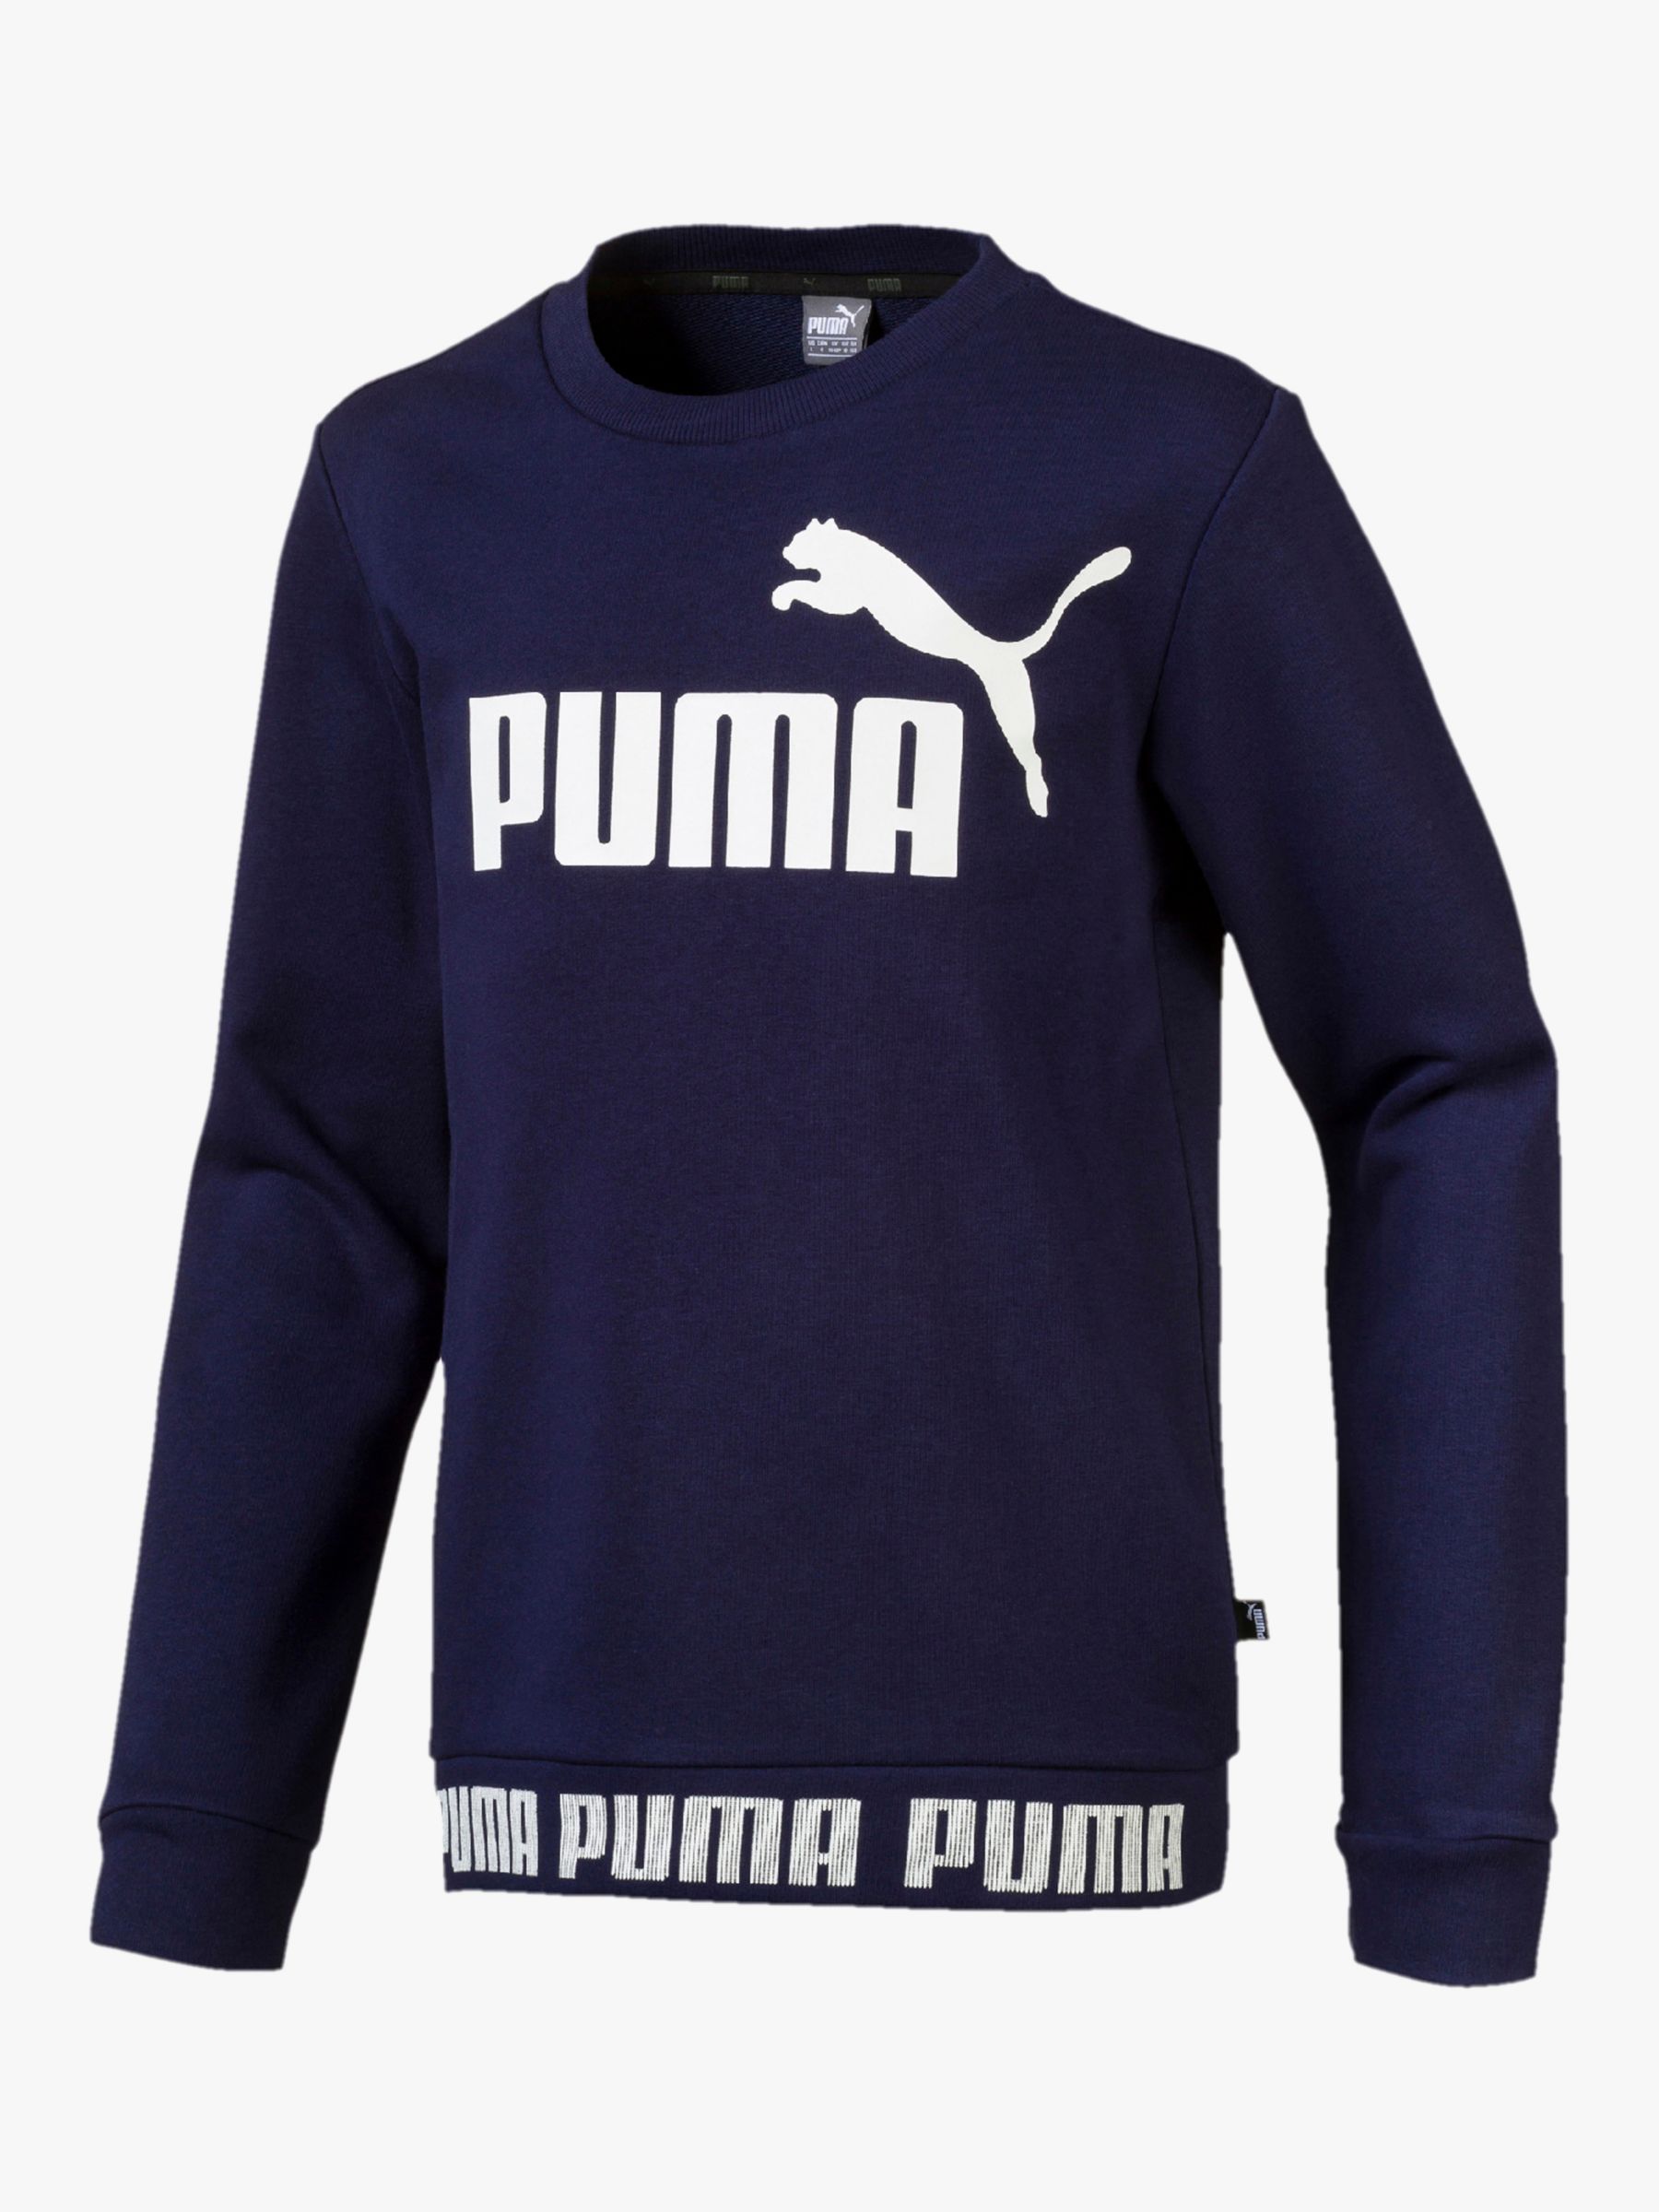 puma jumper cheap